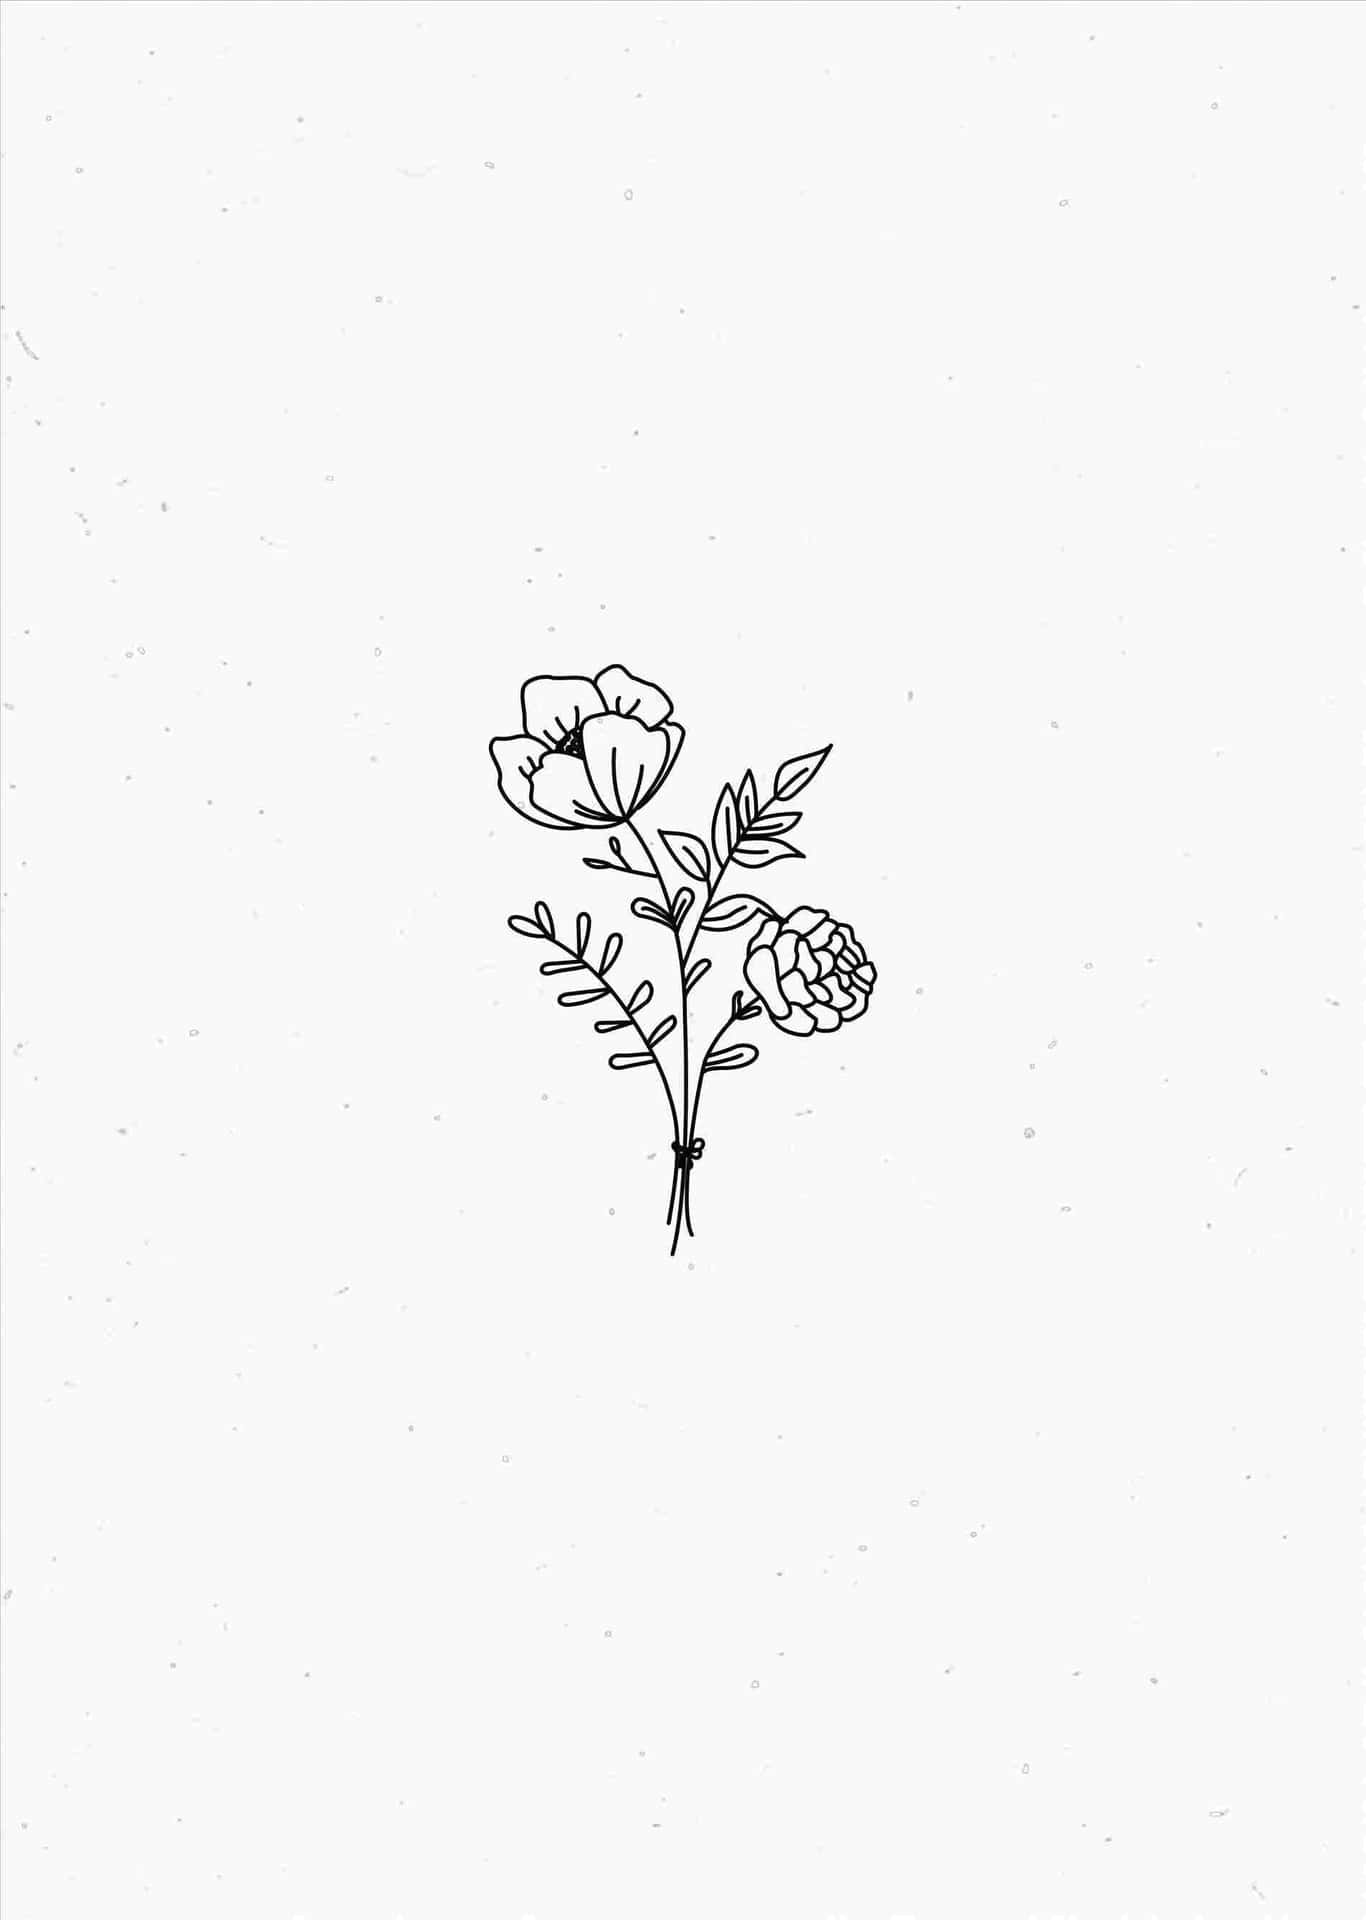 Minimalist Floral Sketch Art.jpg Wallpaper